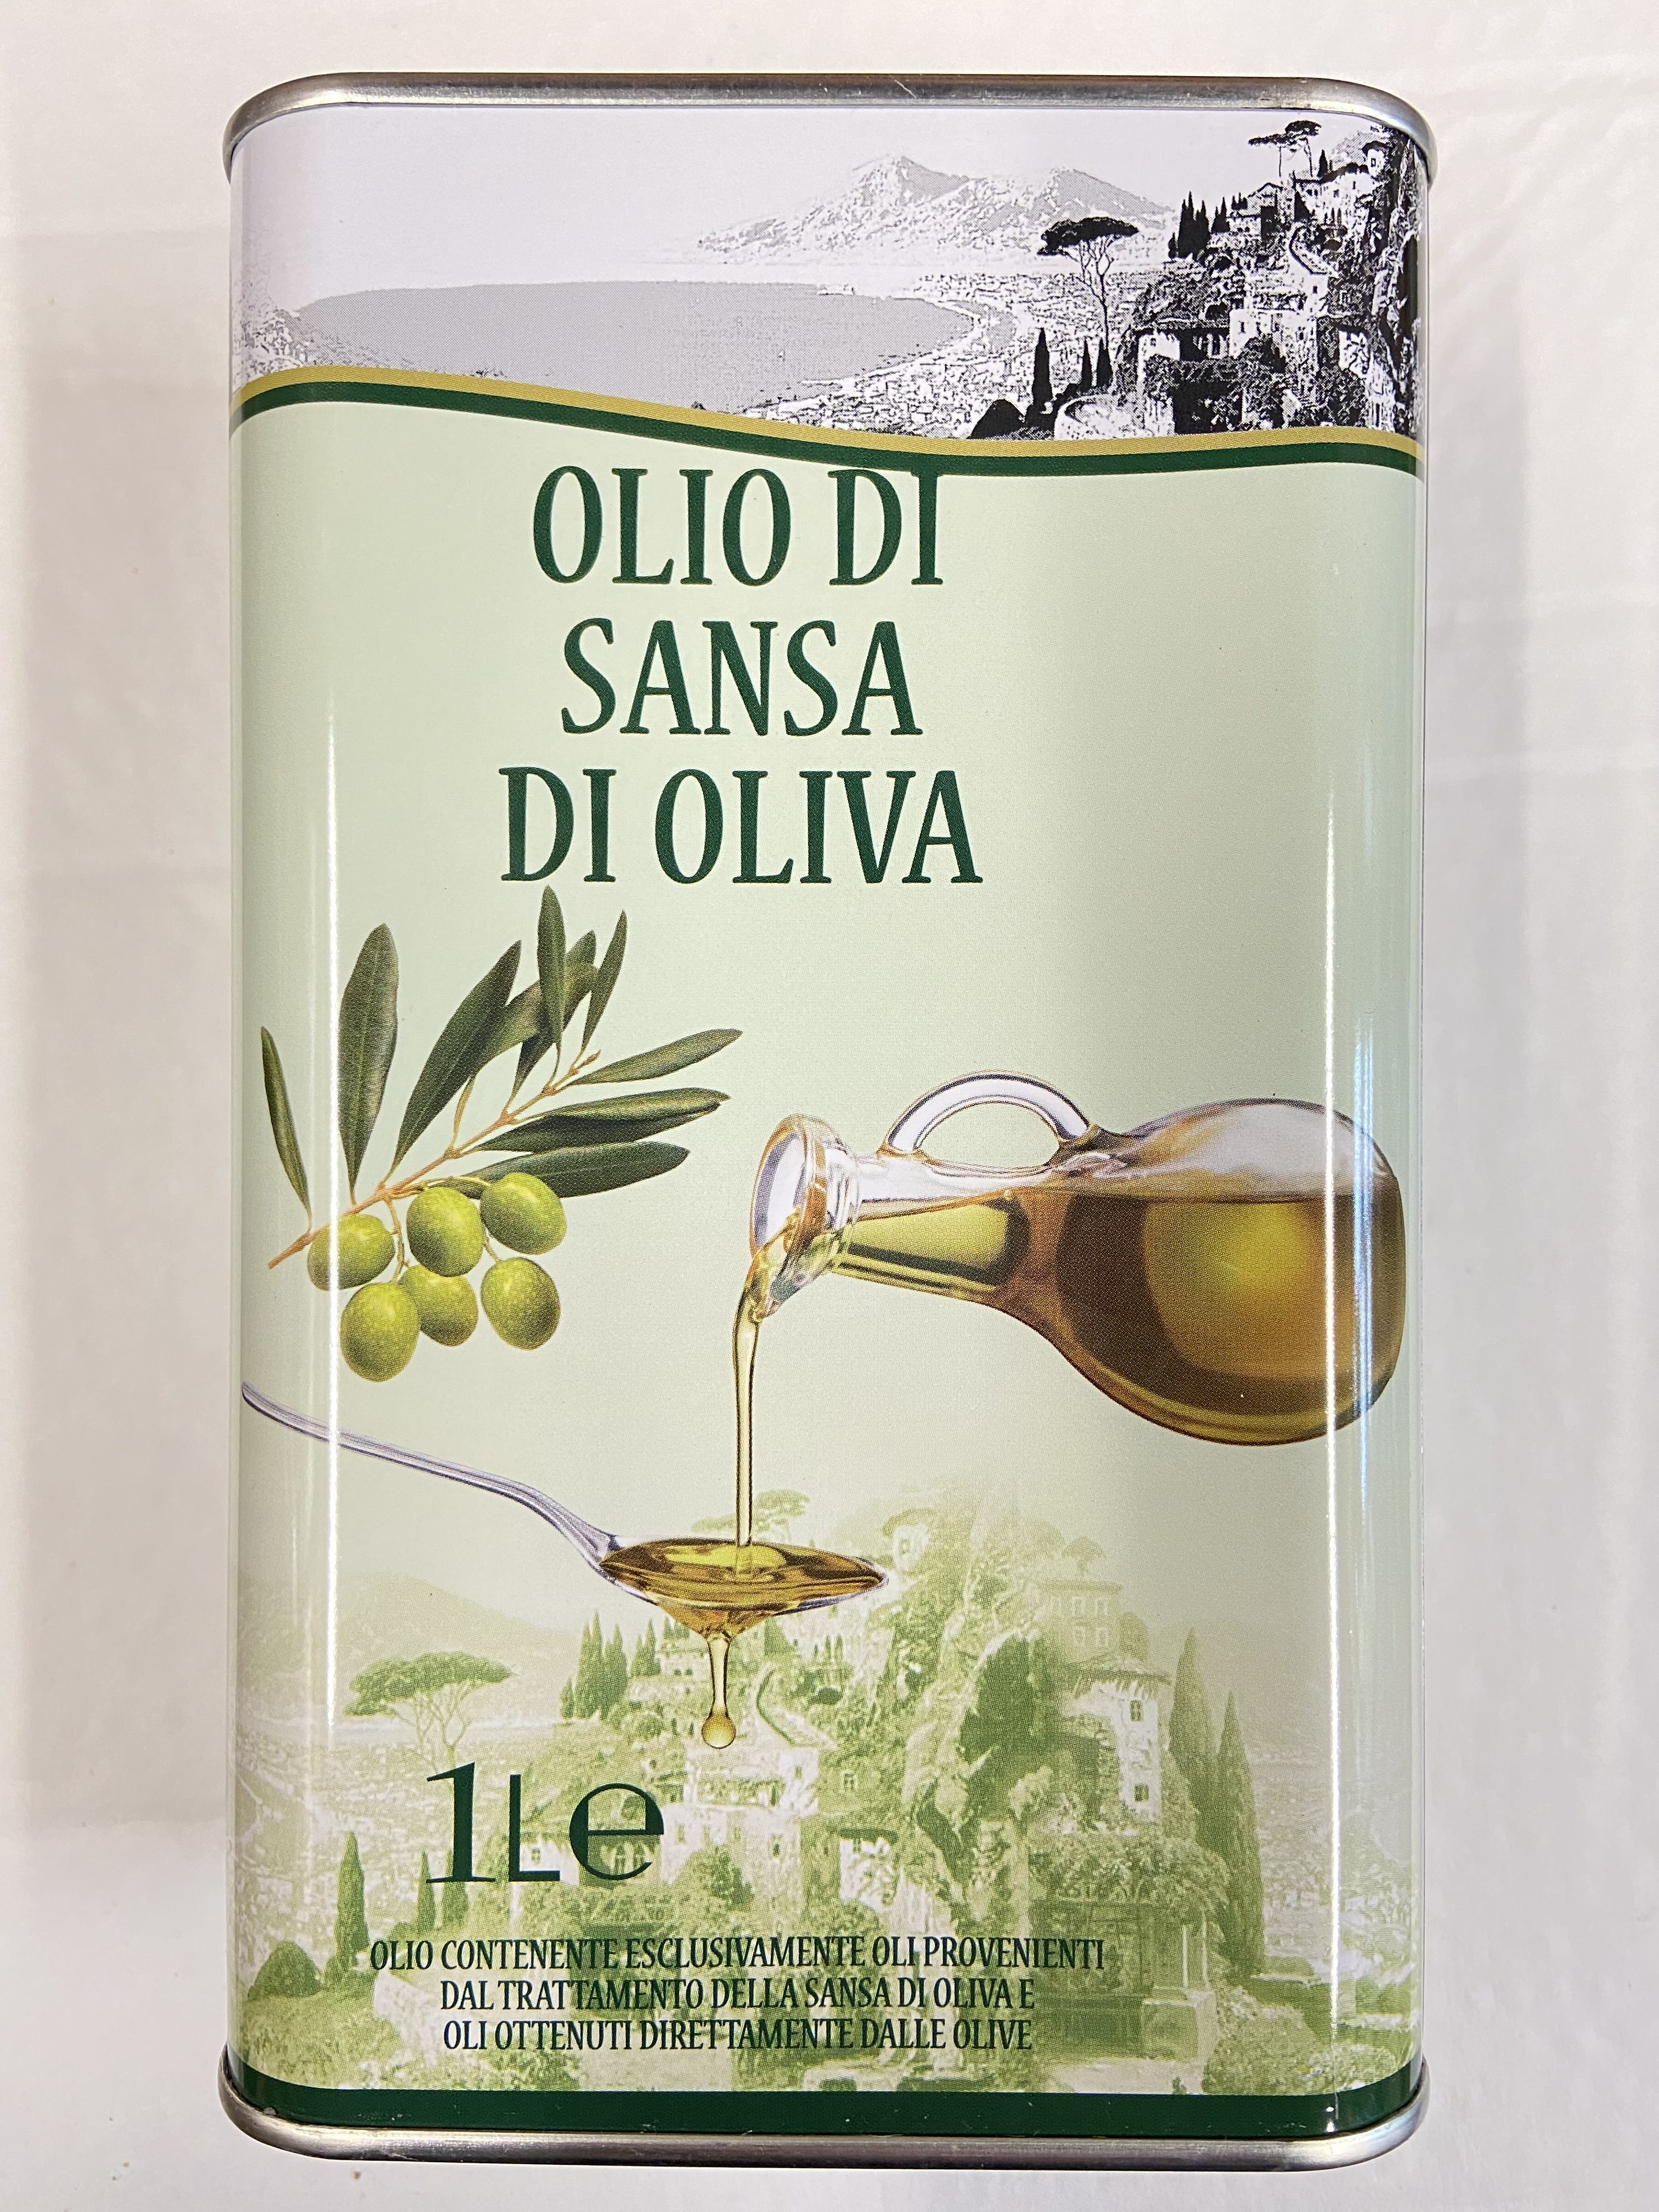 Оливковое масло отзывы покупателей. Масло оливковое Vesuvio Sansa di Oliva, 1 л (Италия). Оливковое масло Vesuvio olio di Sansa di Oliva. Оливковое масло Pomace Olive Oil, 1 л. Масло оливковое 1л olio di Sansa.